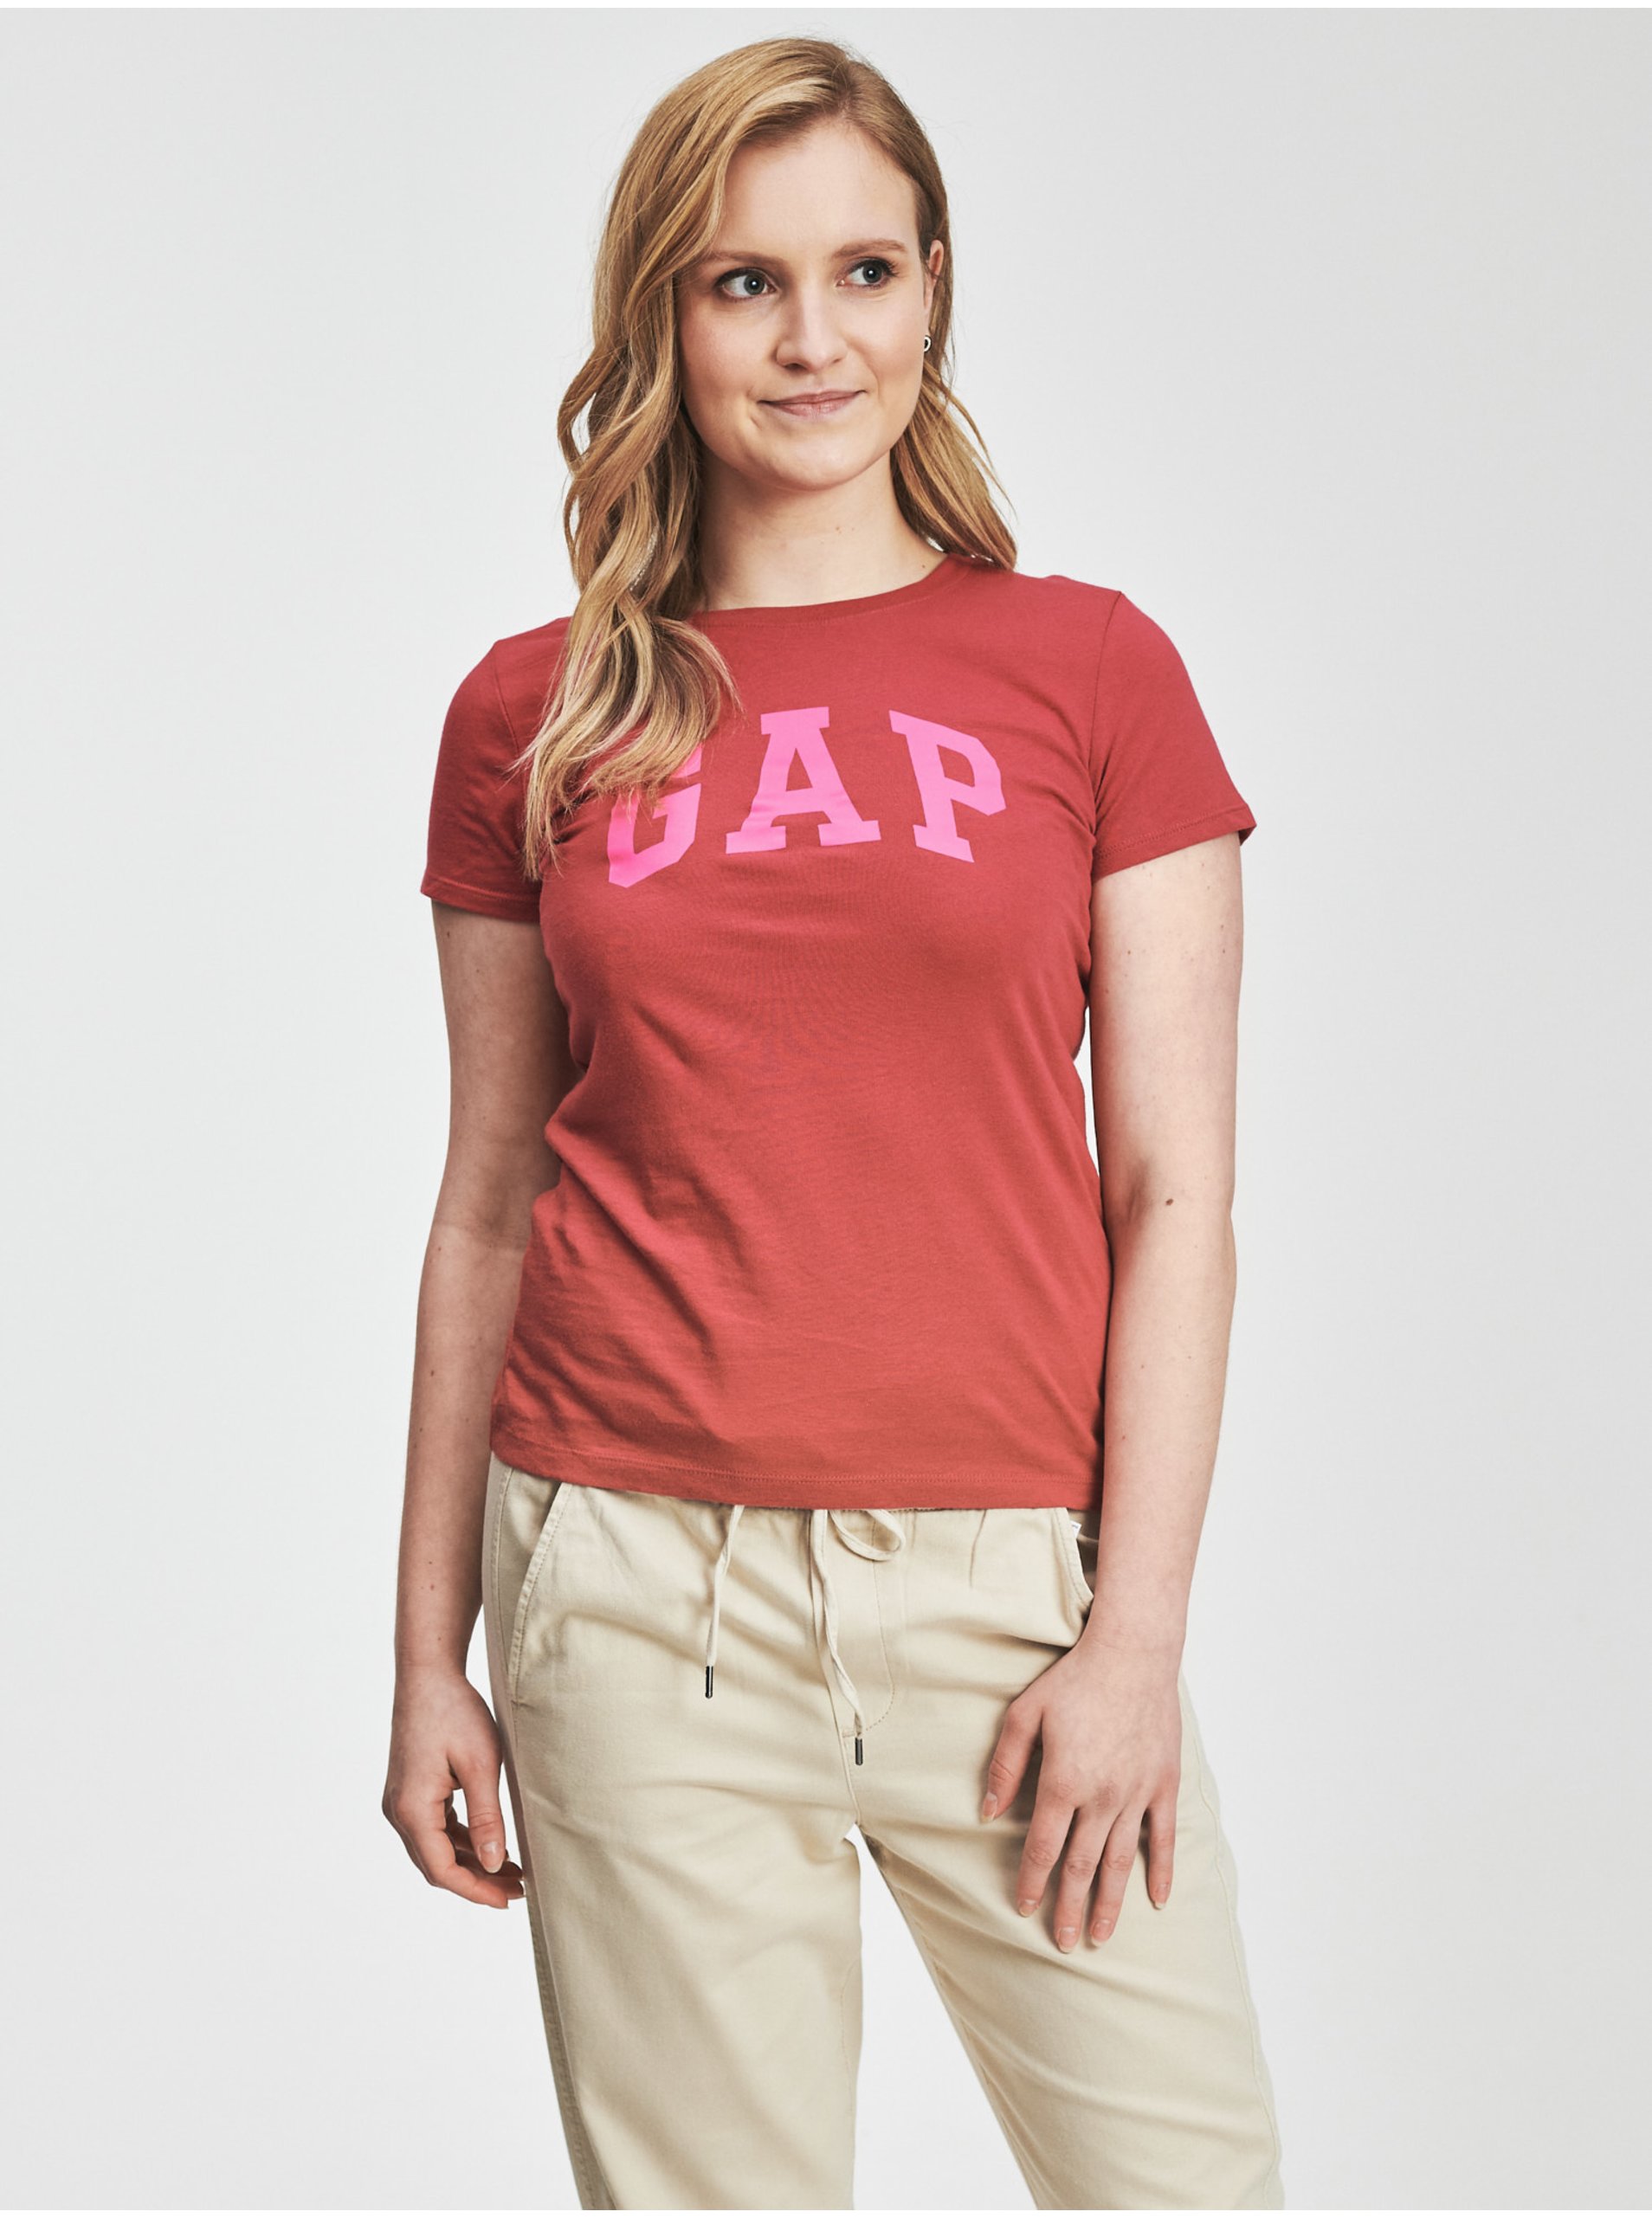 Lacno Ružové dámske tričko GAP Logo t-shirt